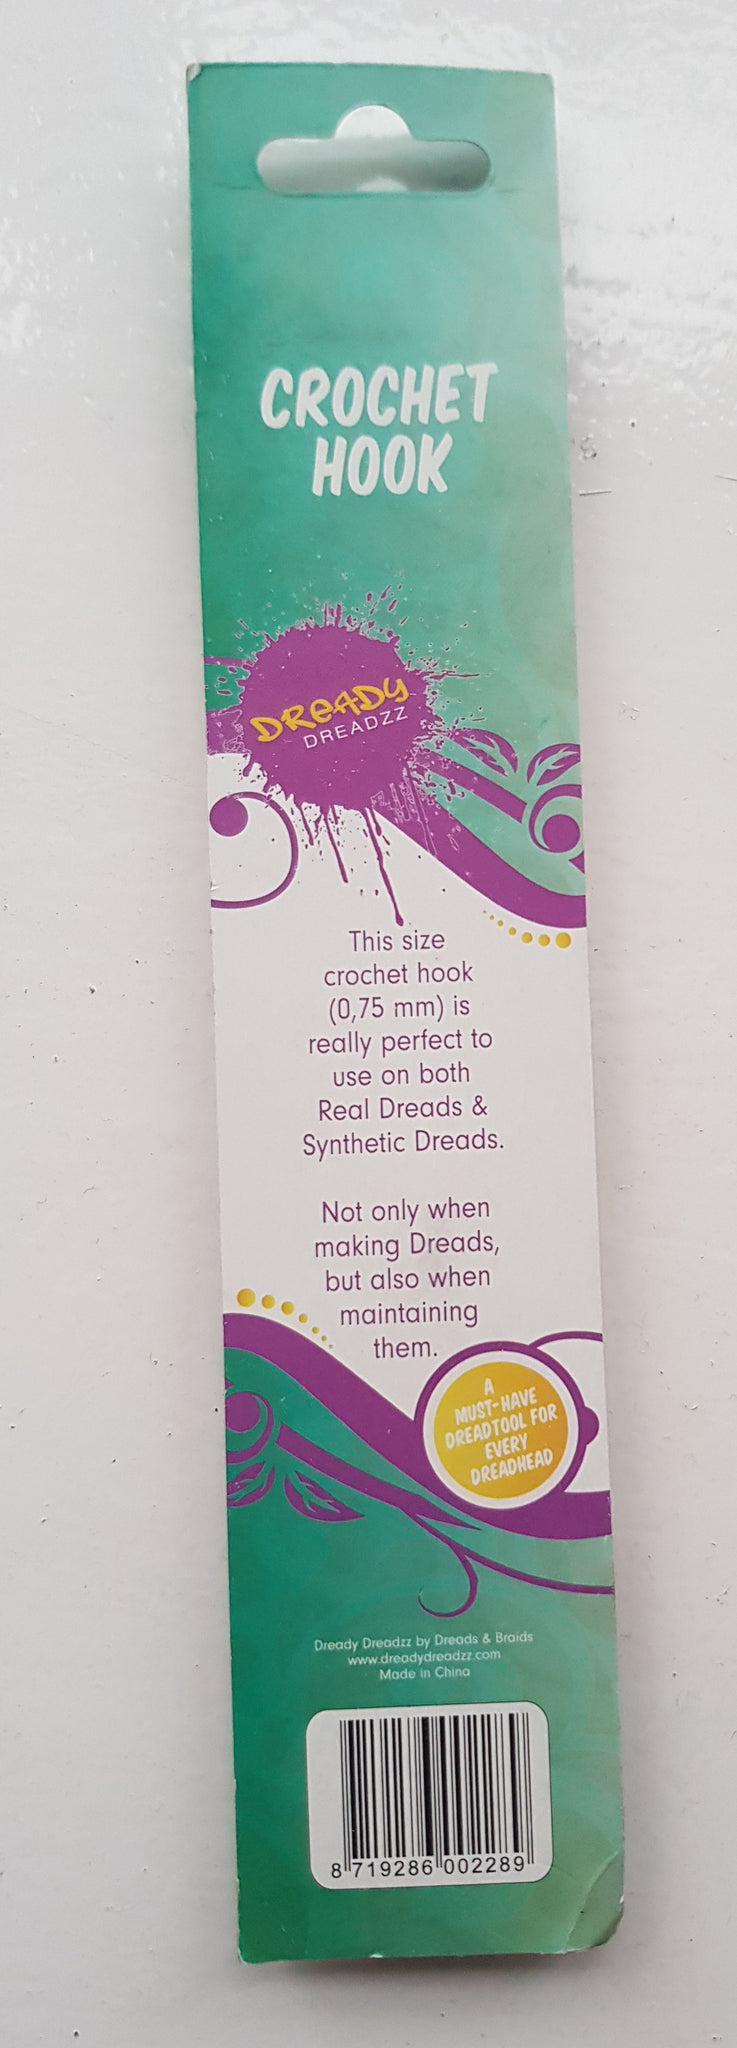 Dready Dreadzz - Dreadlocks Comb